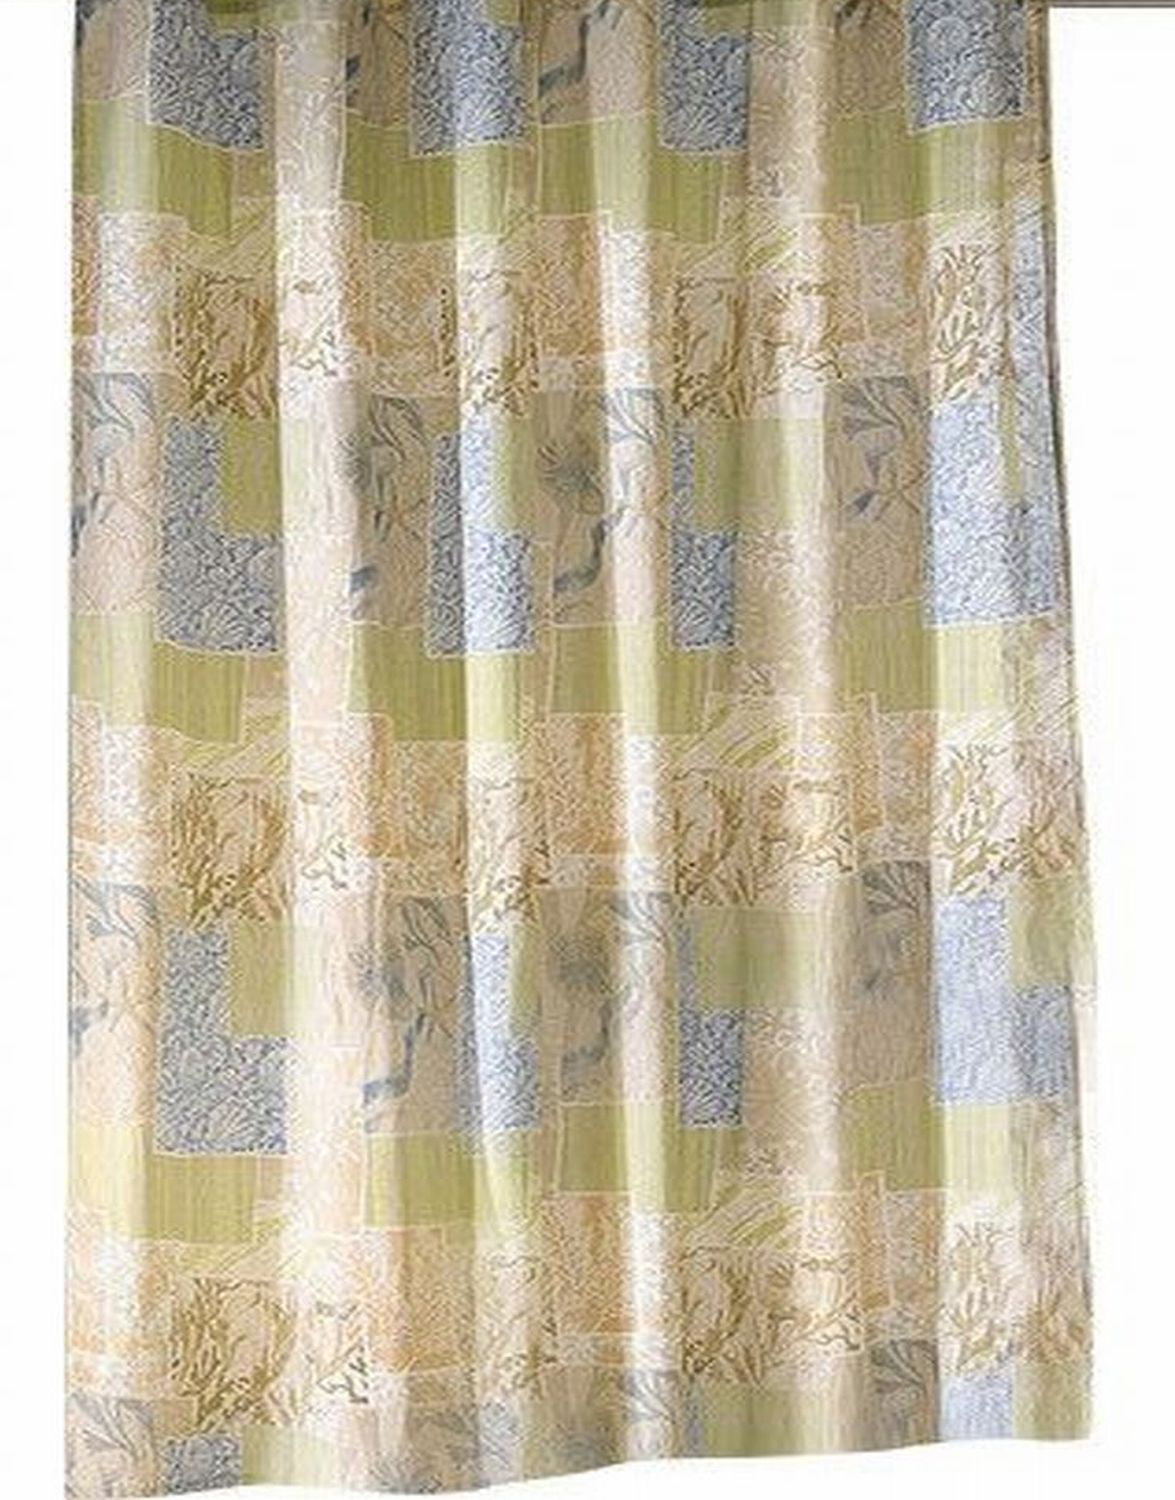 Manarola Village Seaside House Scenic Waterproof Fabric Shower Curtain Liner 72" 